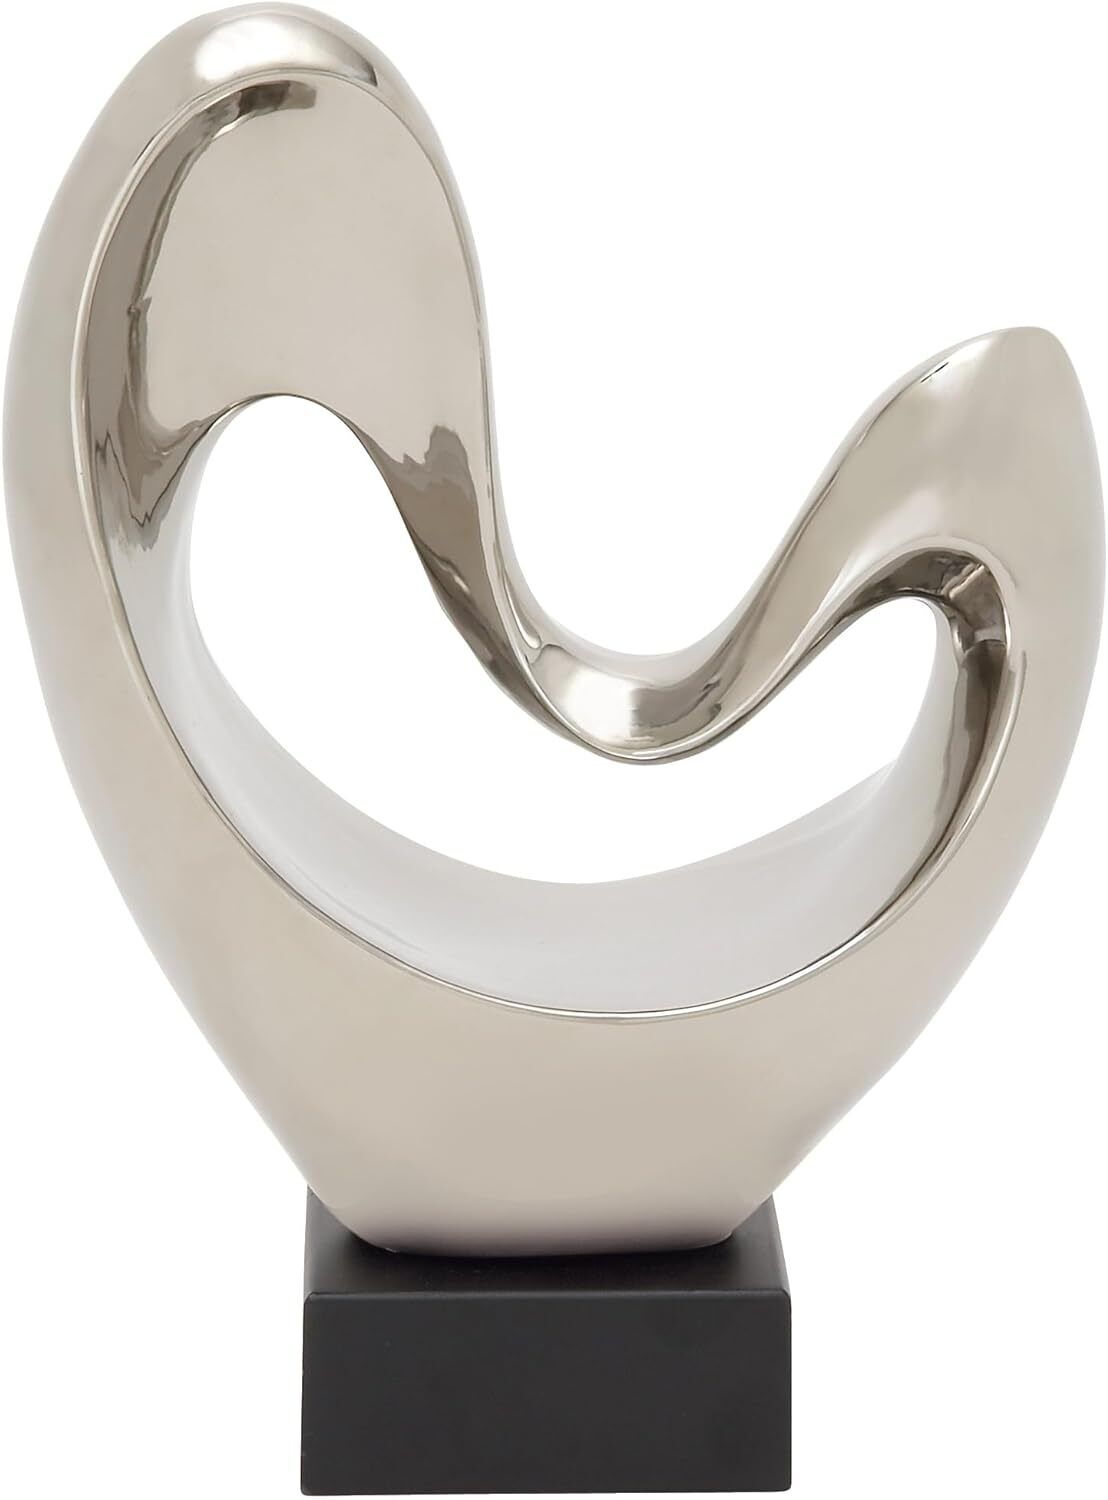 Deco 79 Polystone Abstract Decorative Sculpture Heart Home Decor Silver 